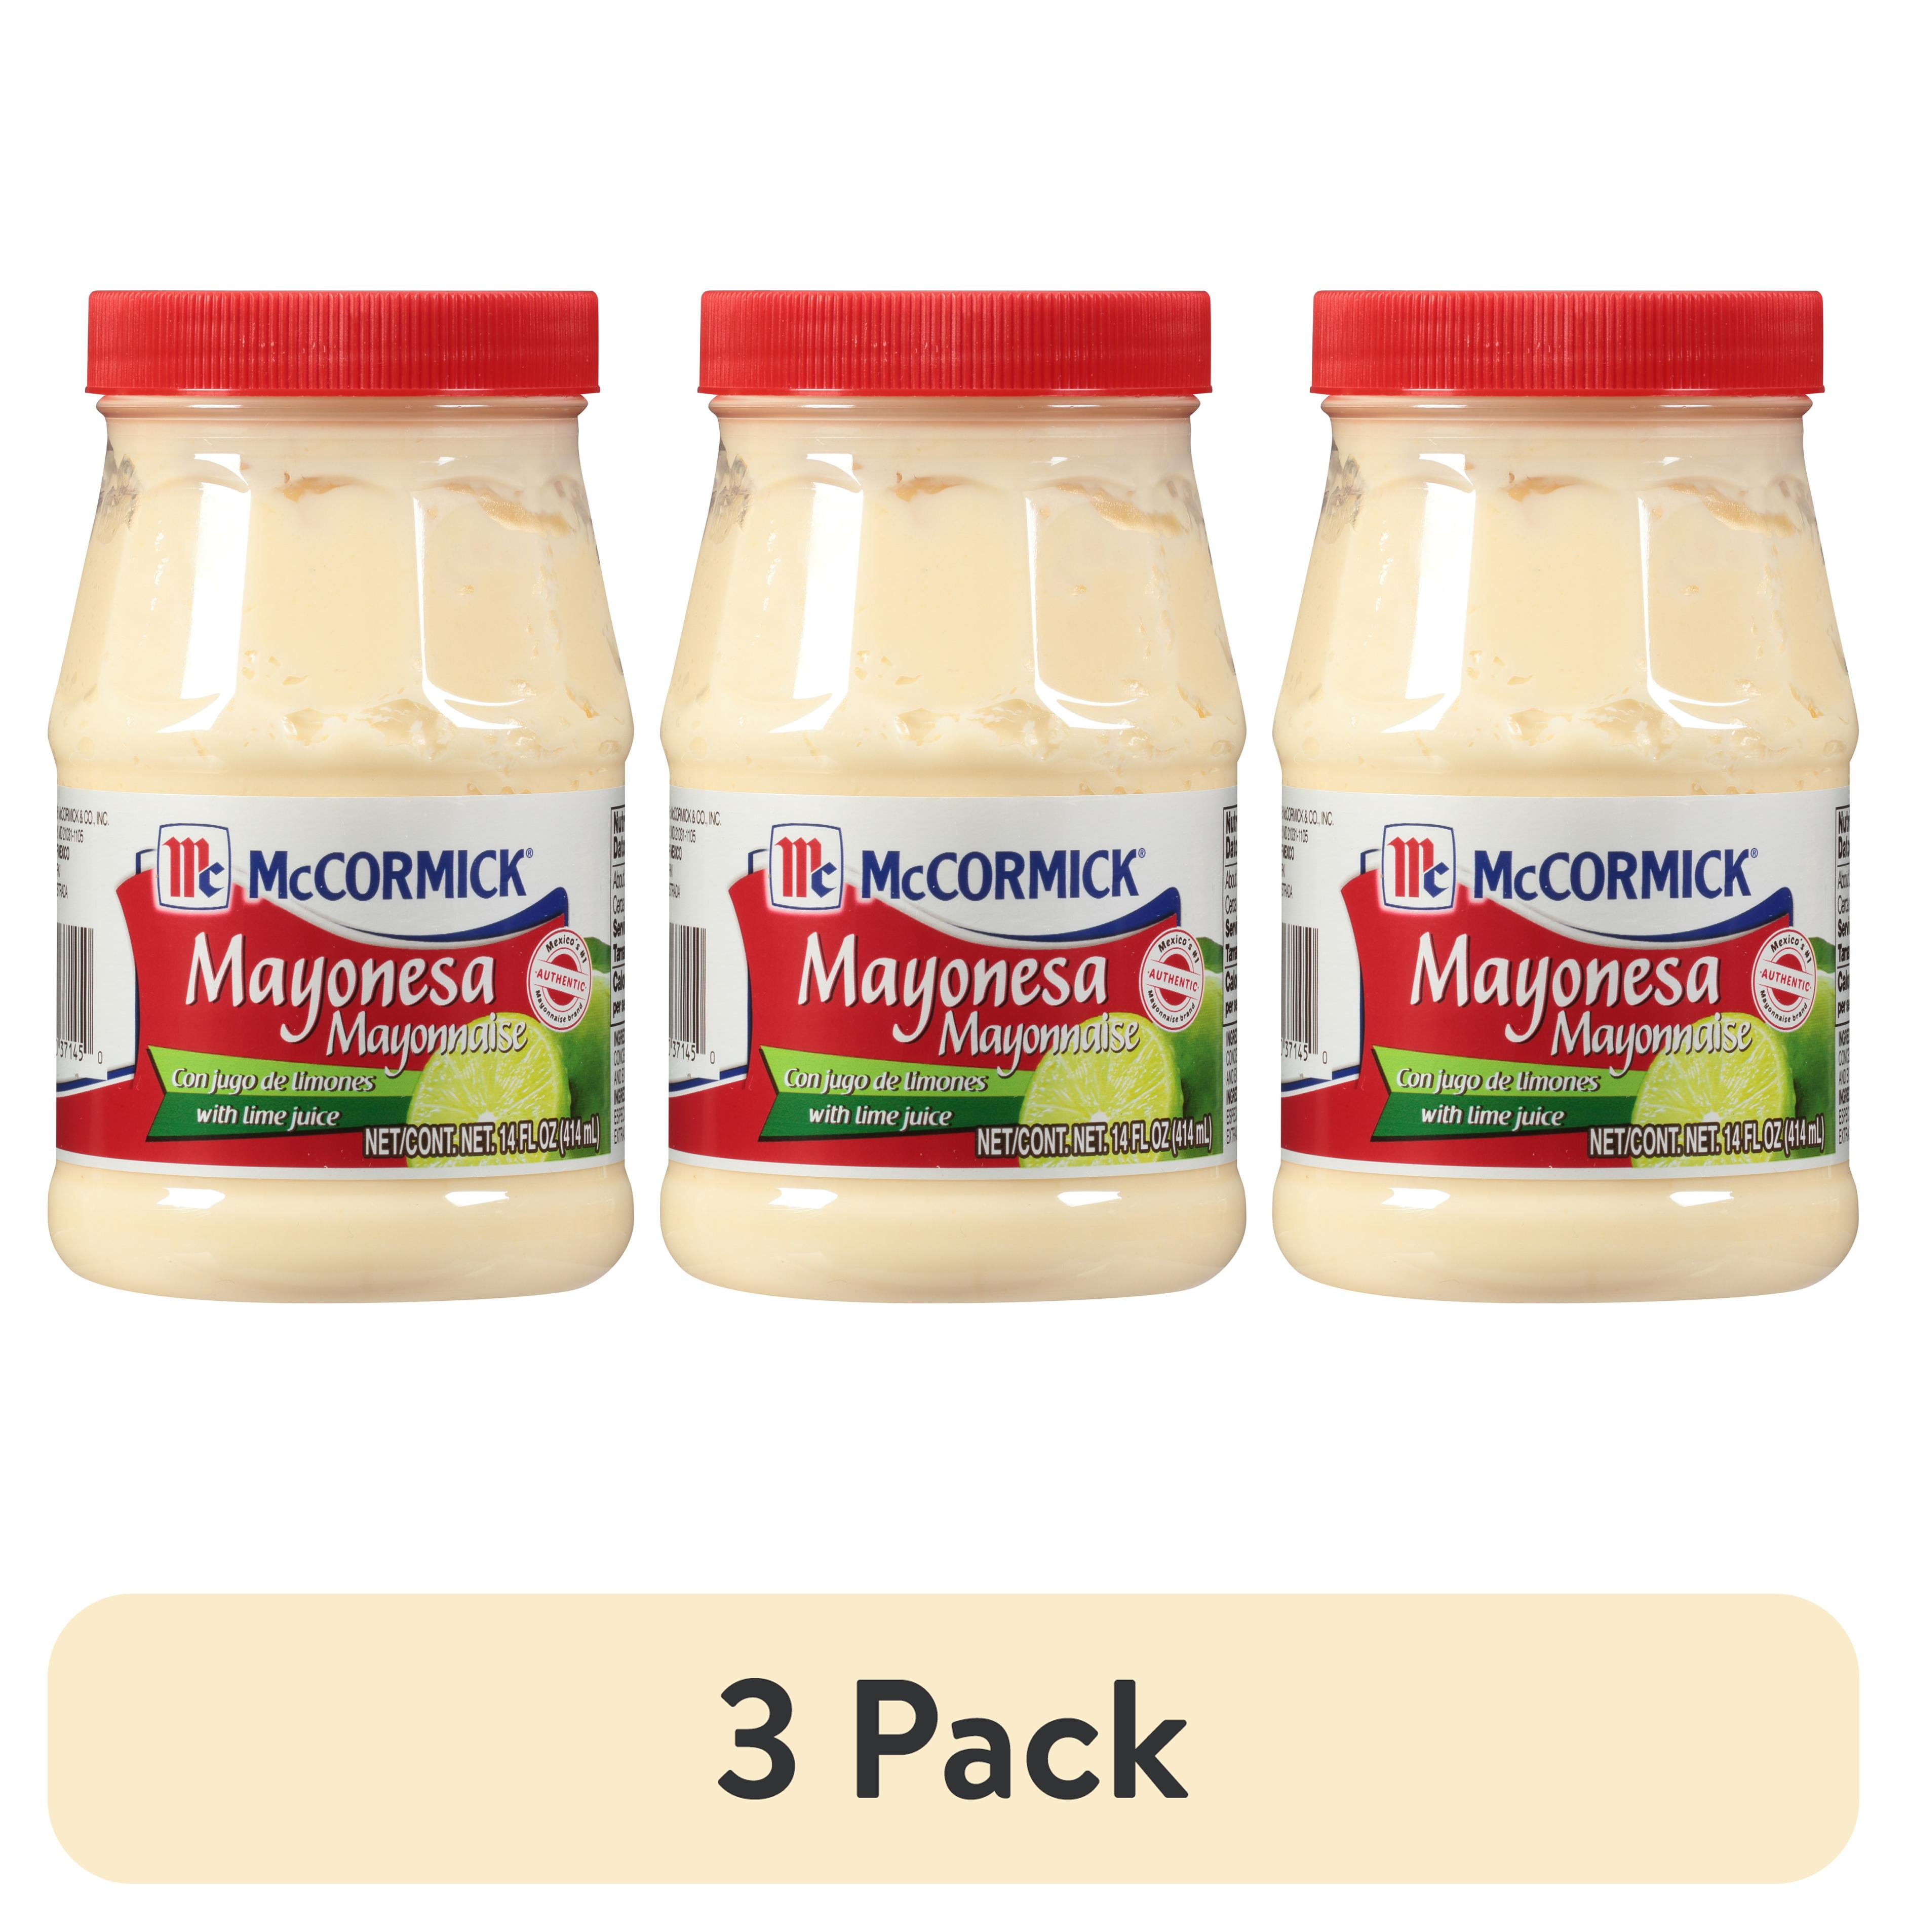 6 JARS McCormick Mayonesa Mayonnaise with Lime Juice 7 oz Mayo